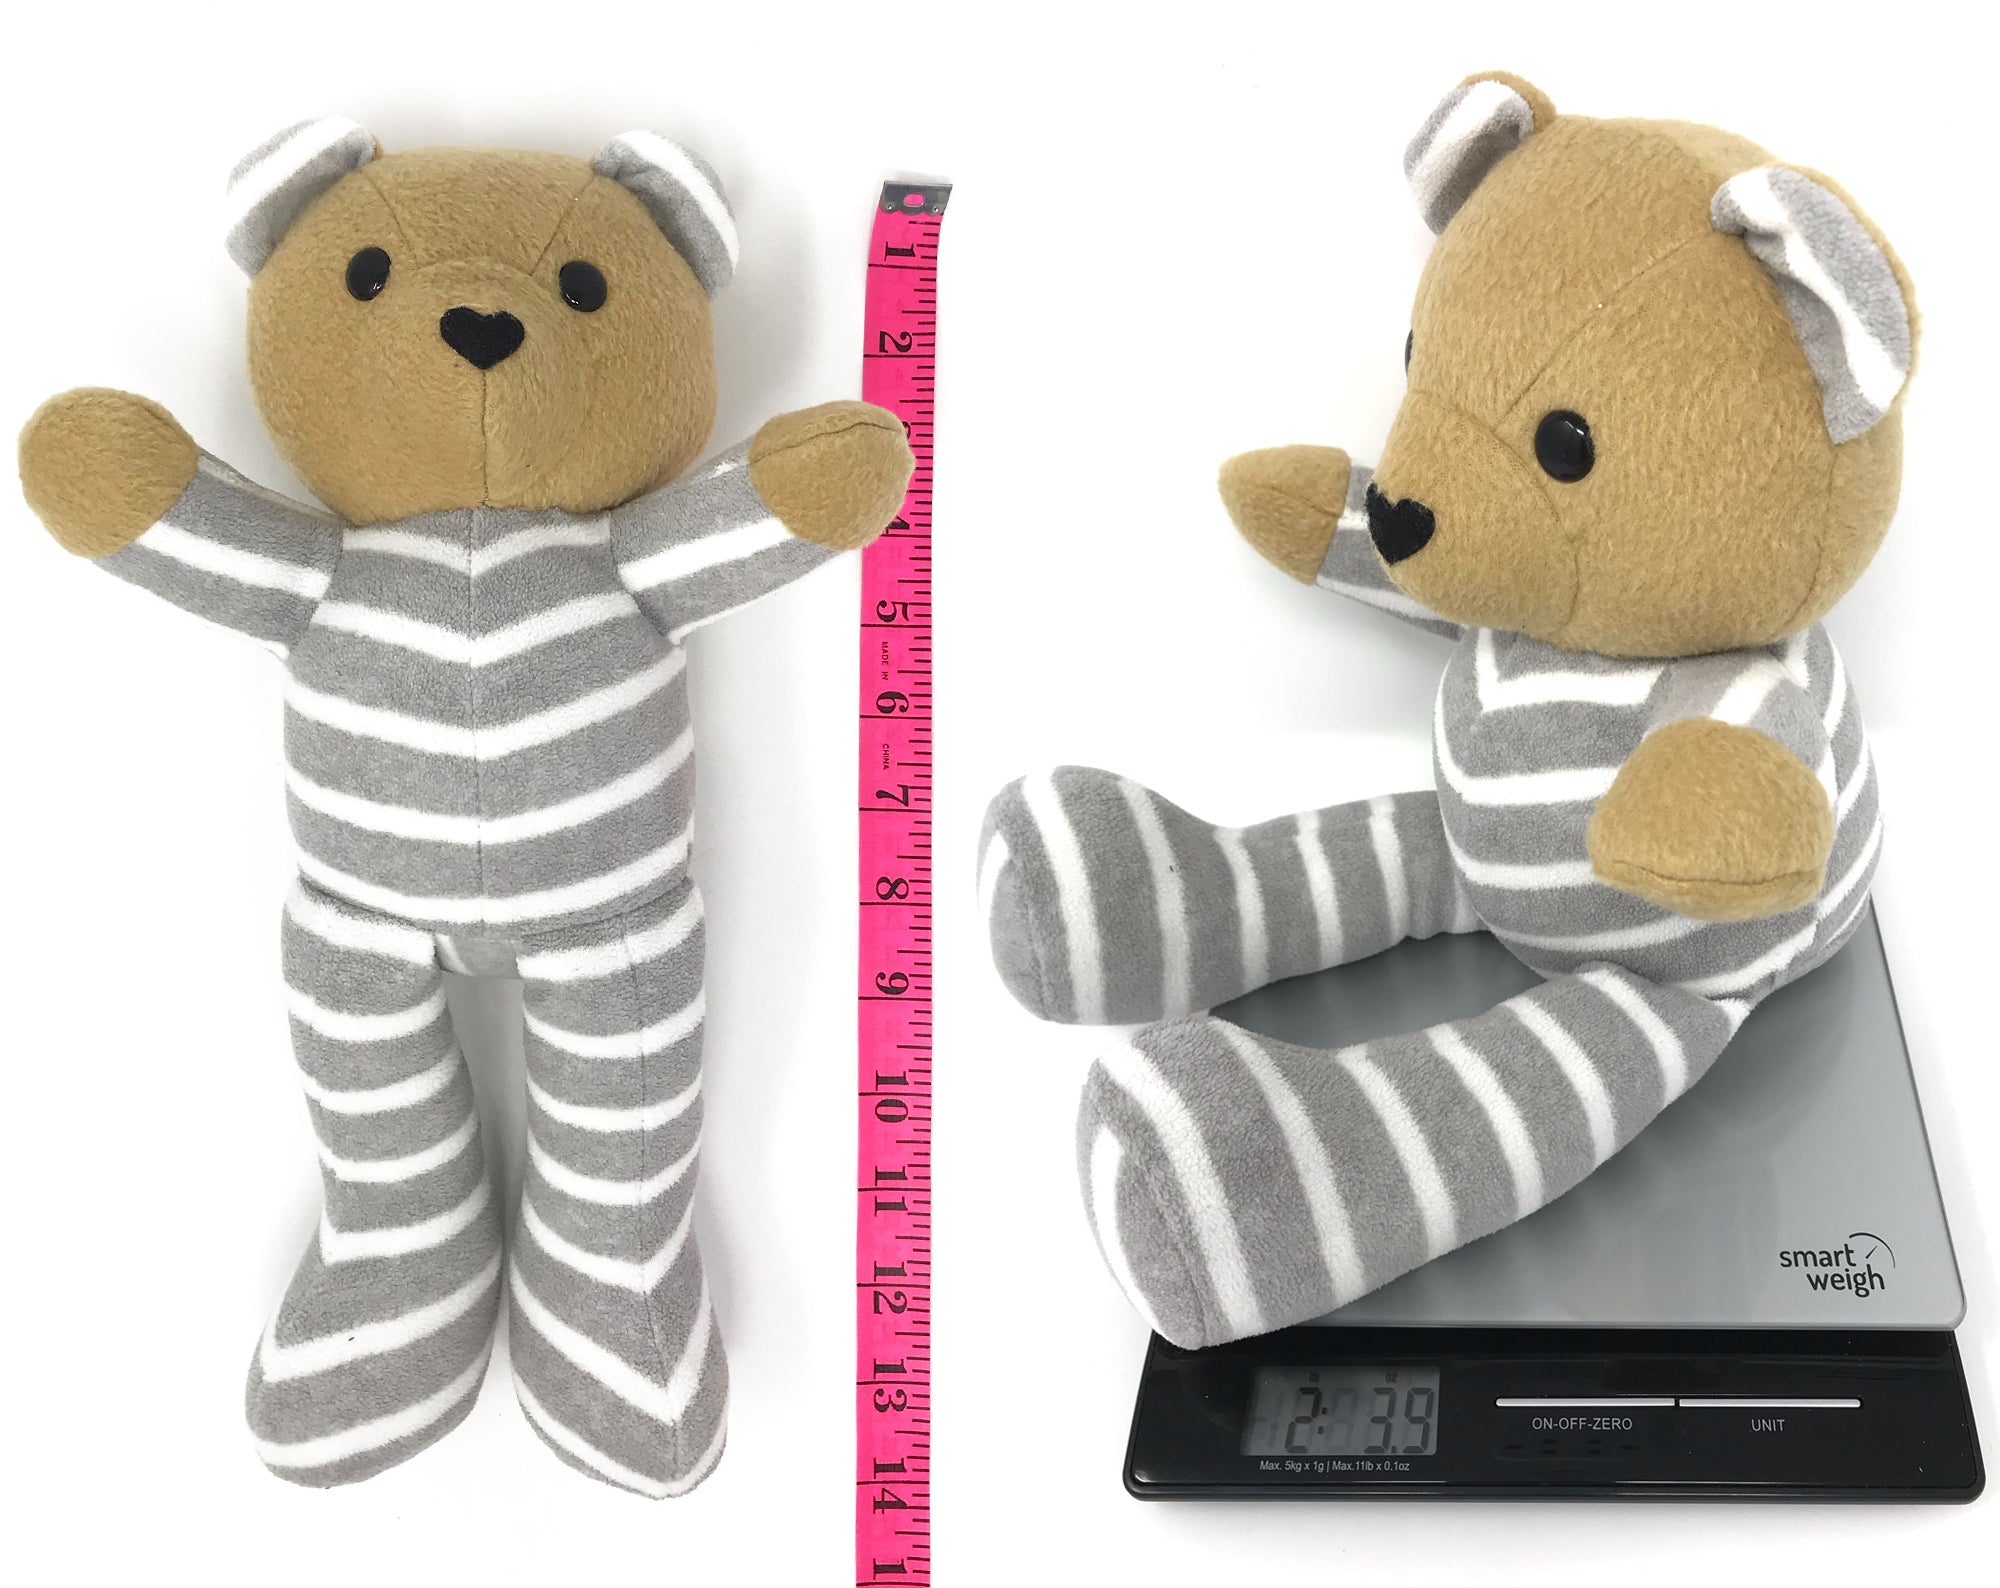 keepsake bear made from baby clothes